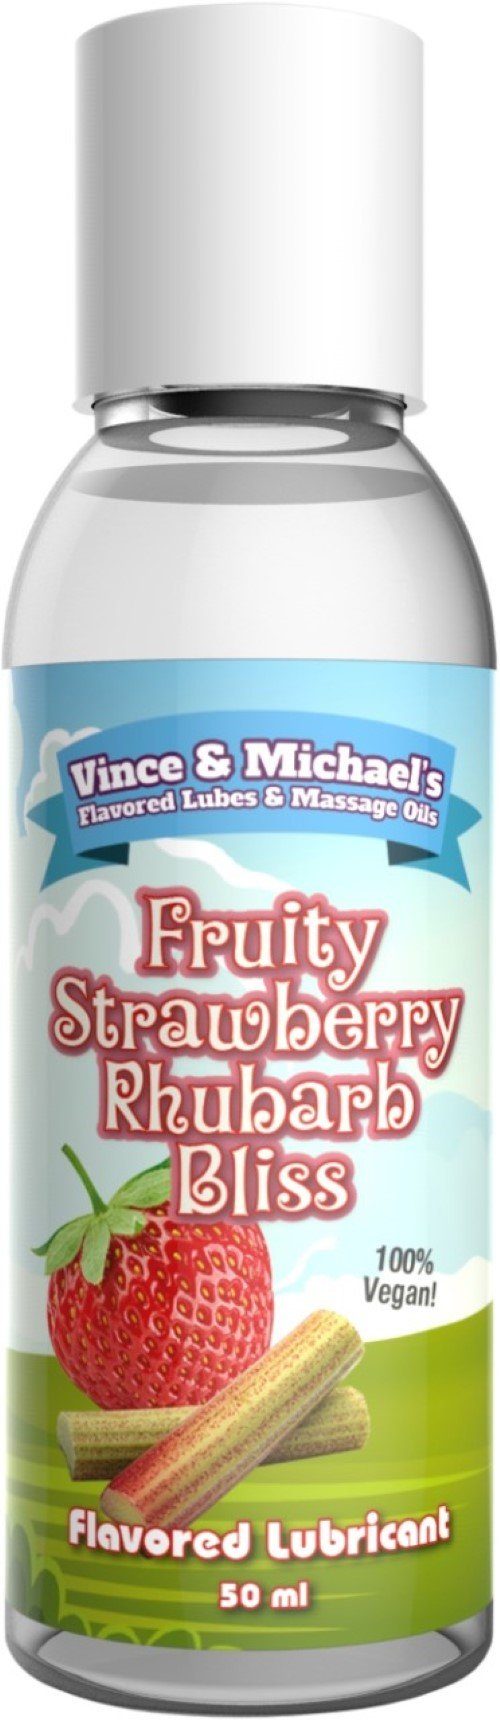 Vince & Michael´s Gleitgel 50 ml - VINCE & MICHAEL's Fruity Strawberry Rhubarb Bliss 50ml | Gleitgele